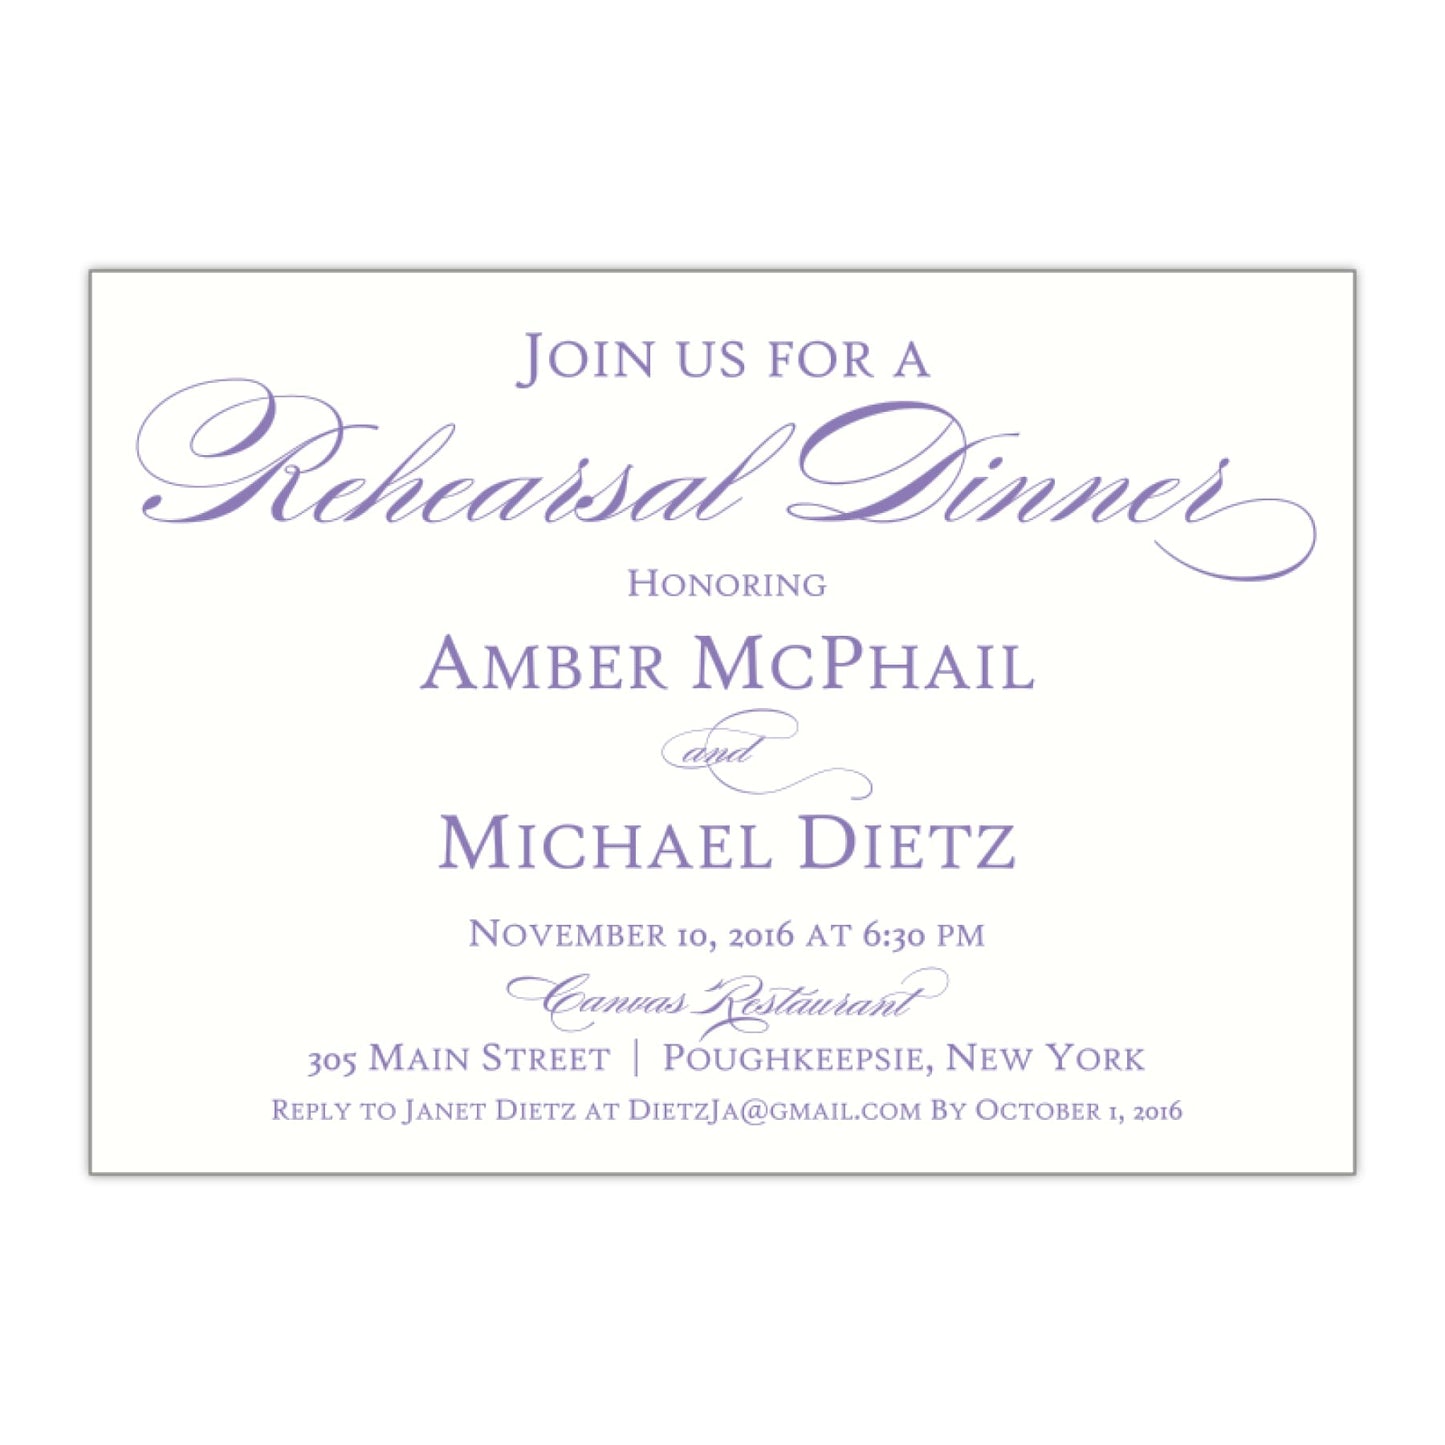 Formal Rehearsal Dinner Invitation, Amber 1 - All That Glitters Invitations